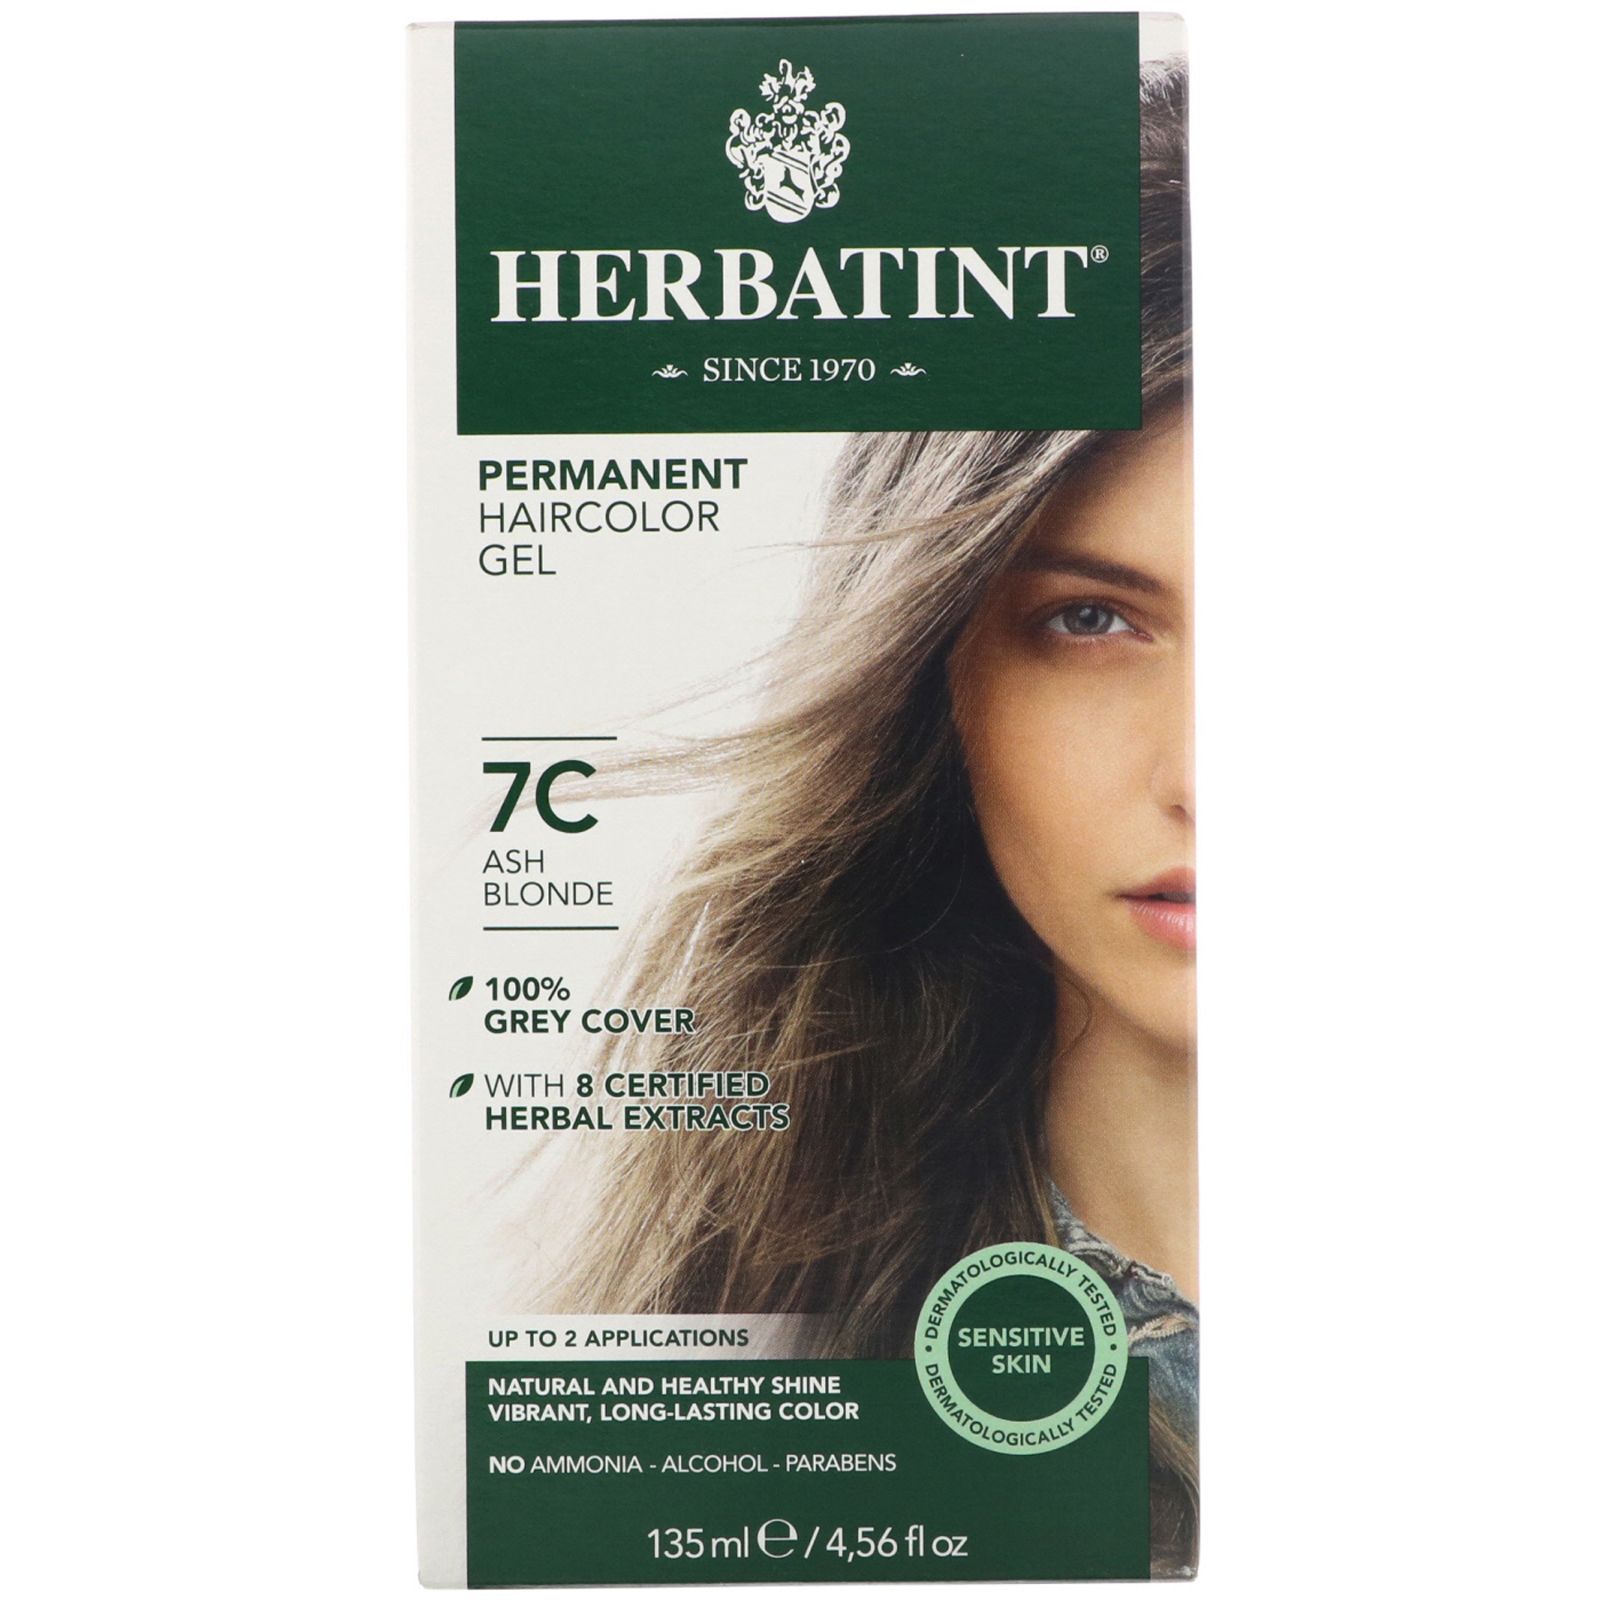 Herbatint Permanent Haircolor Gel 7c Ash Blonde 4 56 Fl Oz